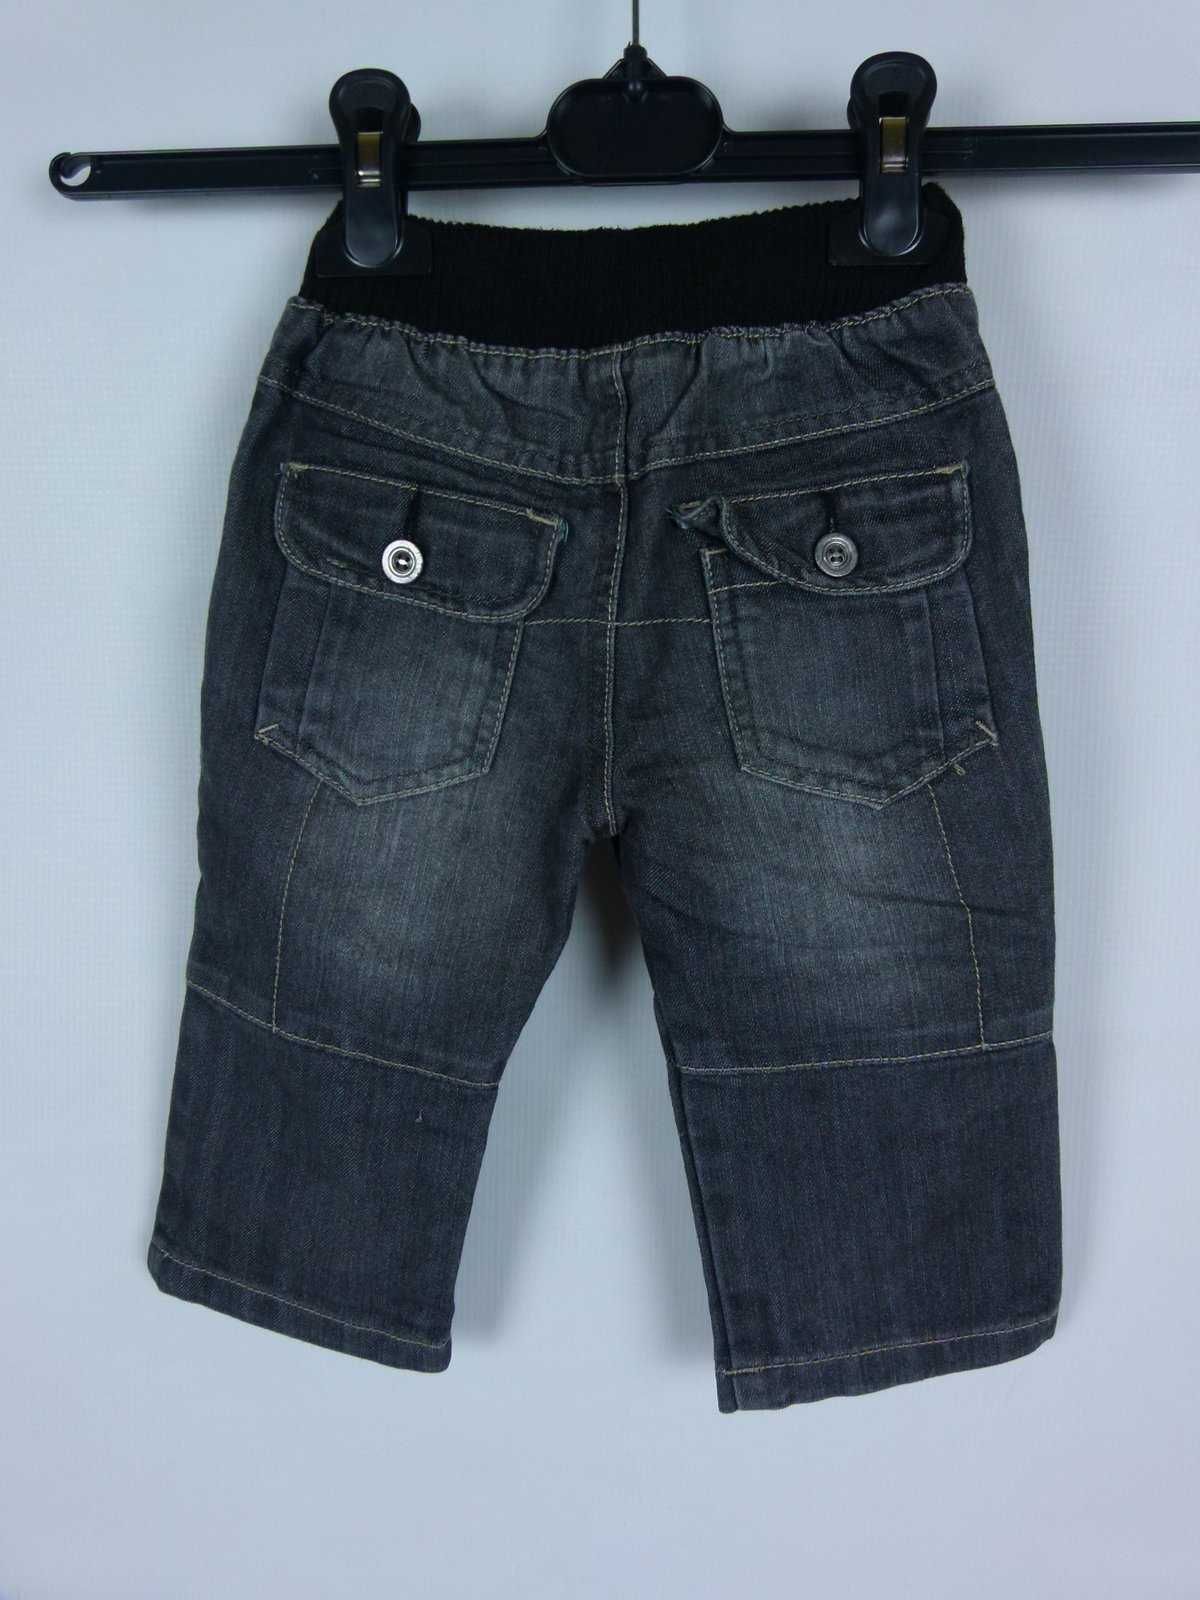 Matalan spodnie dżins 9 - 12 msc / 74 cm